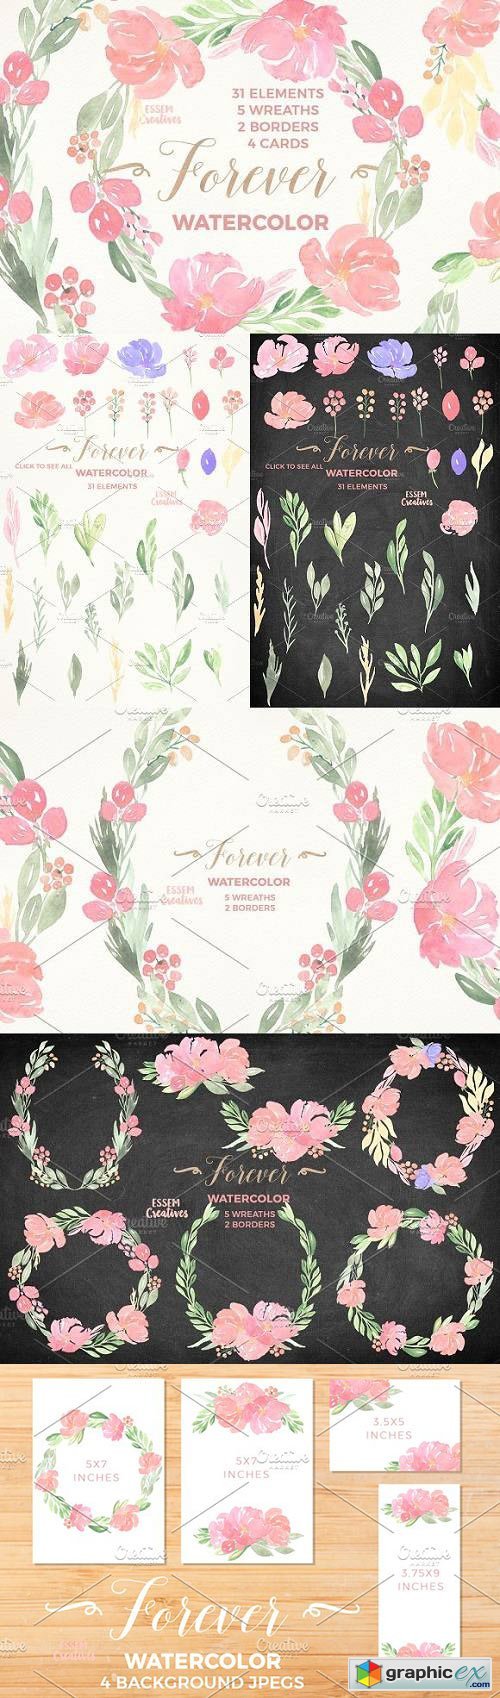 Watercolor Floral Bundle - Forever